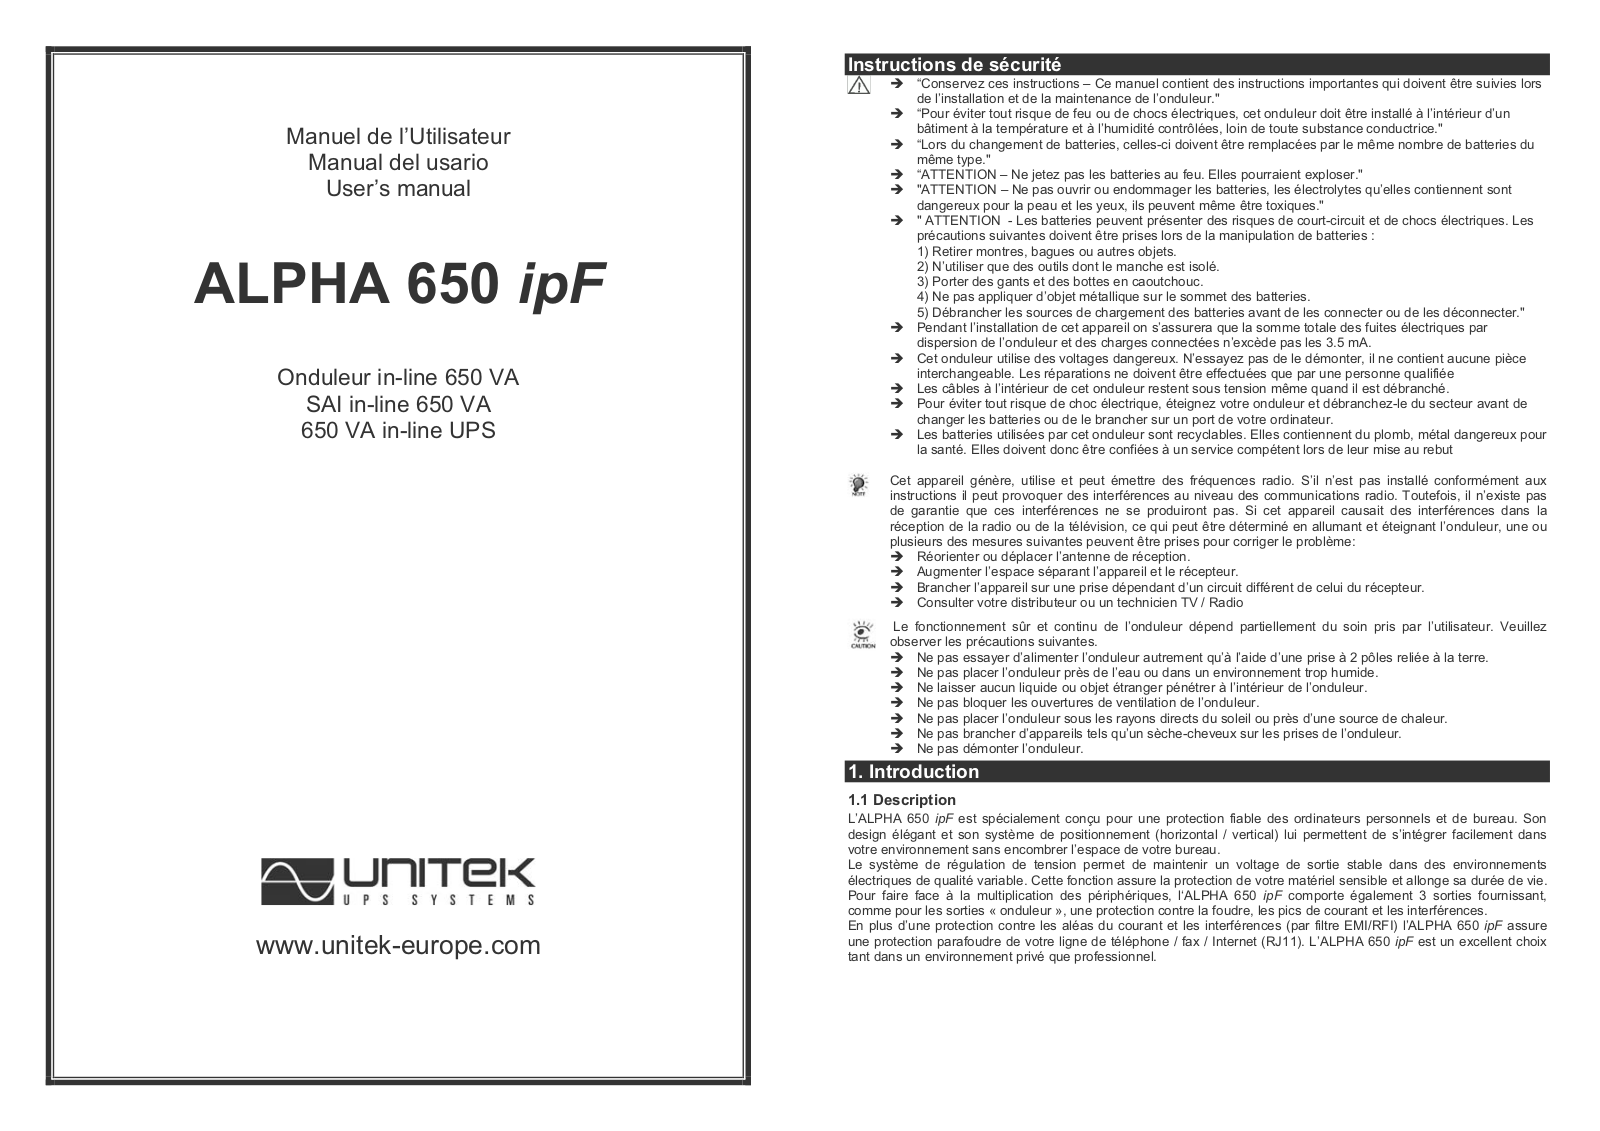 UNITEK ALPHA 650 ipF User Manual